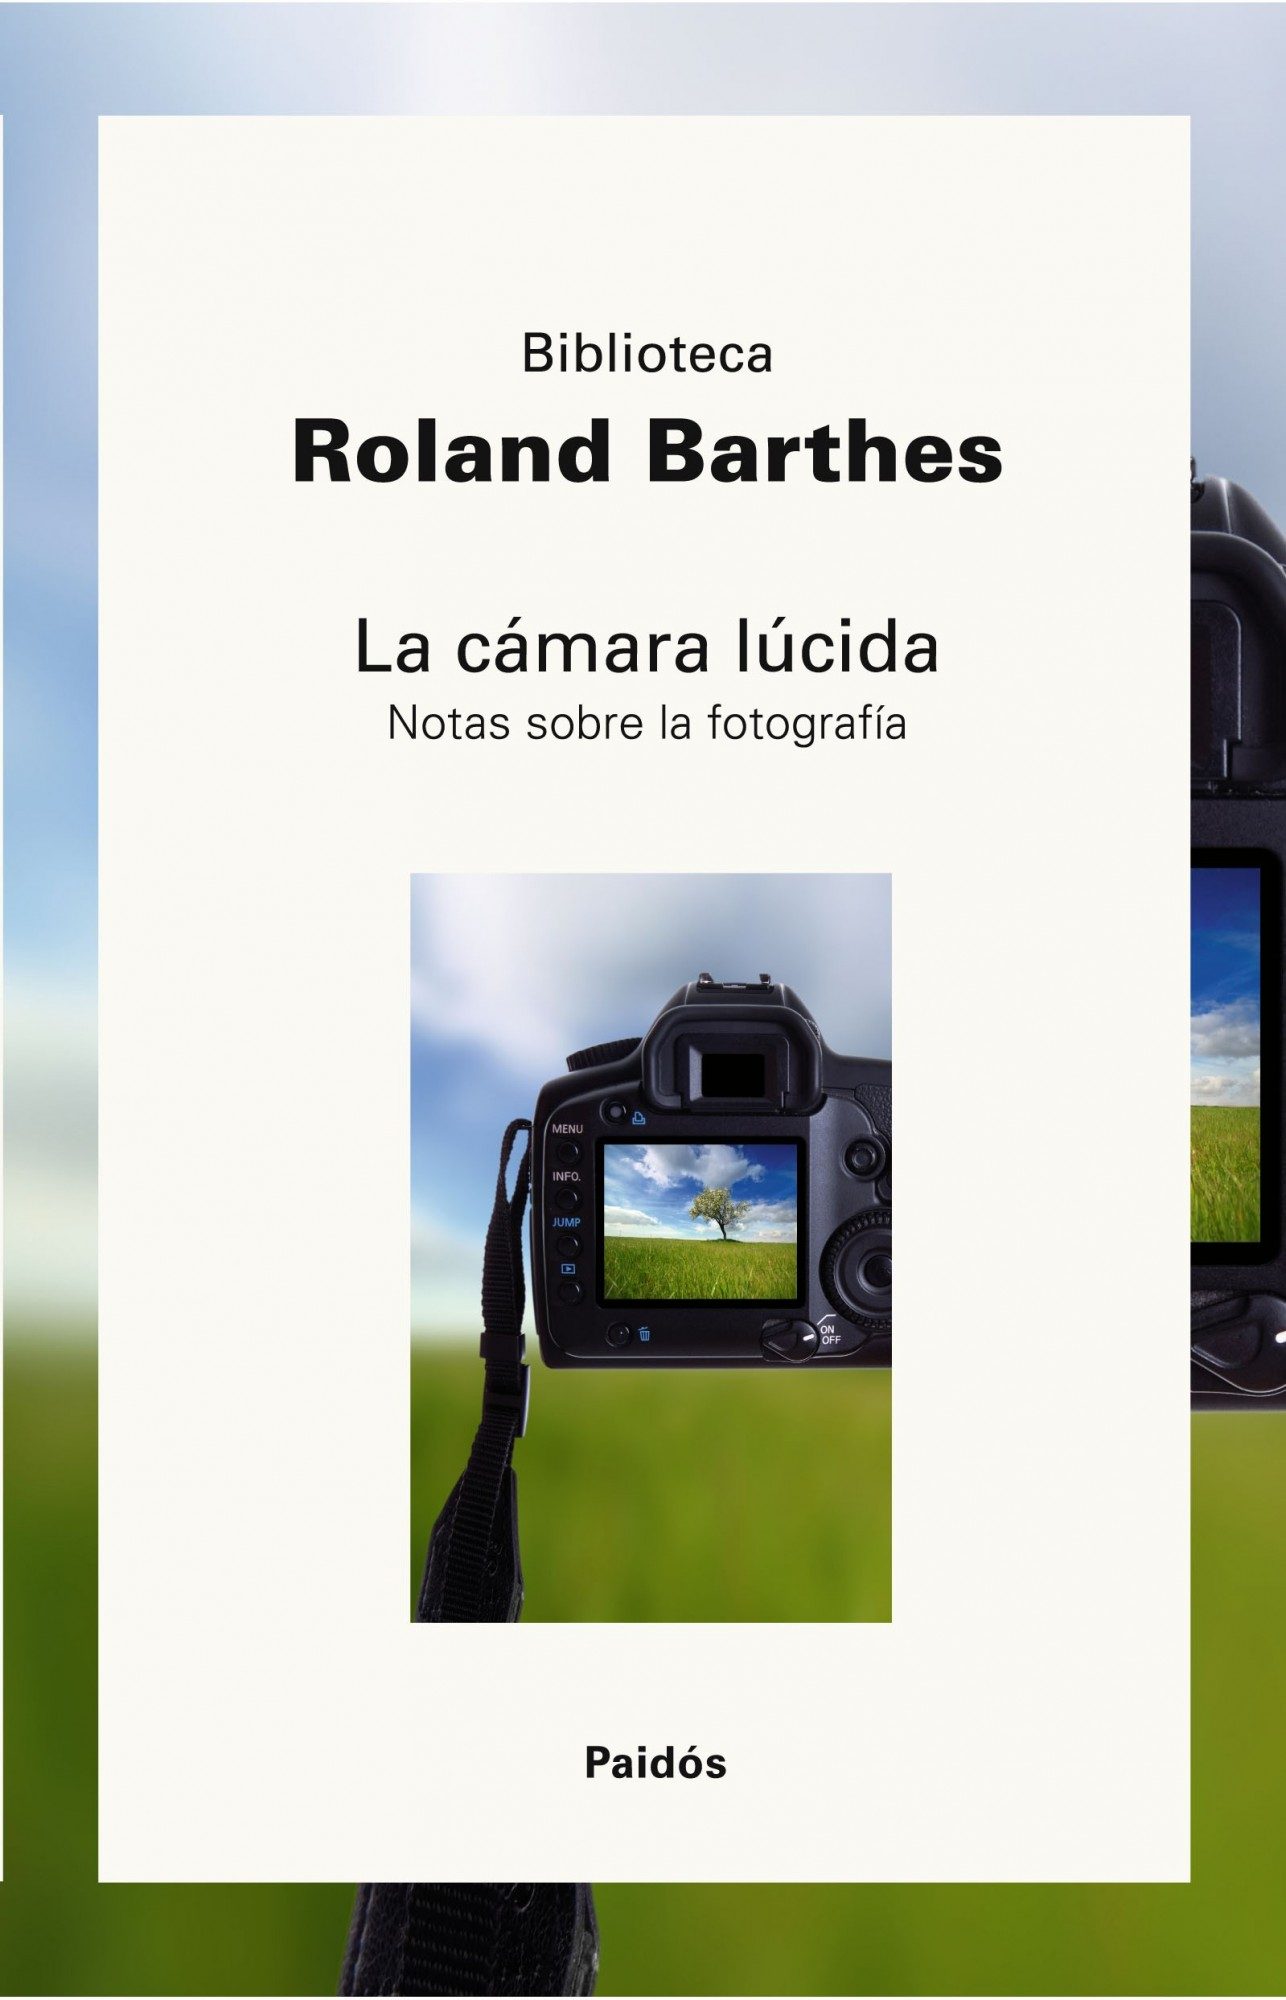 La Cámara Lúcida de Roland Barthes se describe como un libro autorreferencial, a pesar de ello se convirtió en un indispensable para los fotógrafos.